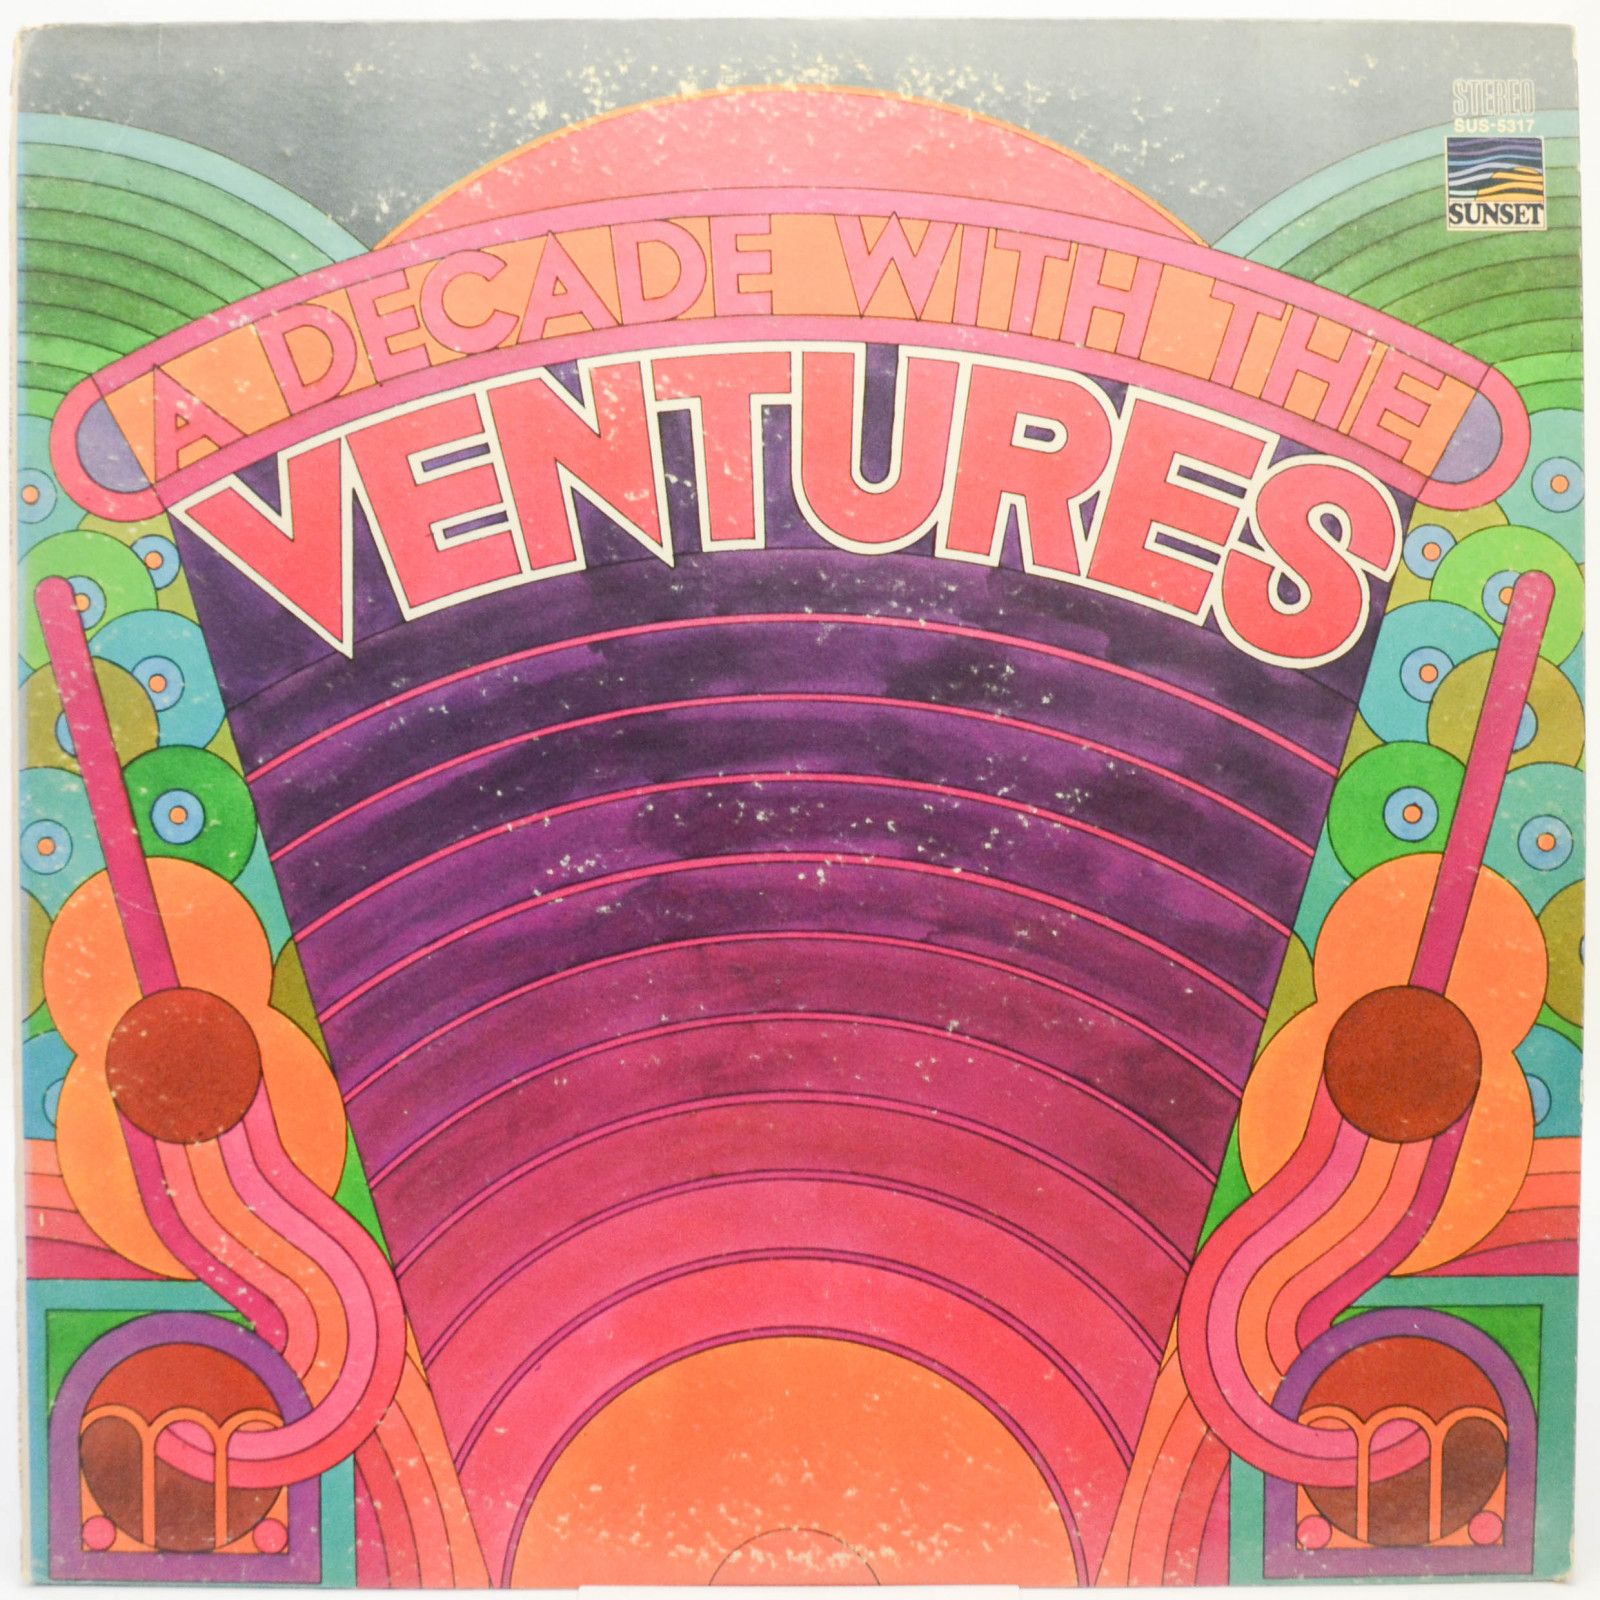 Ventures — A Decade With The Ventures (USA), 1971